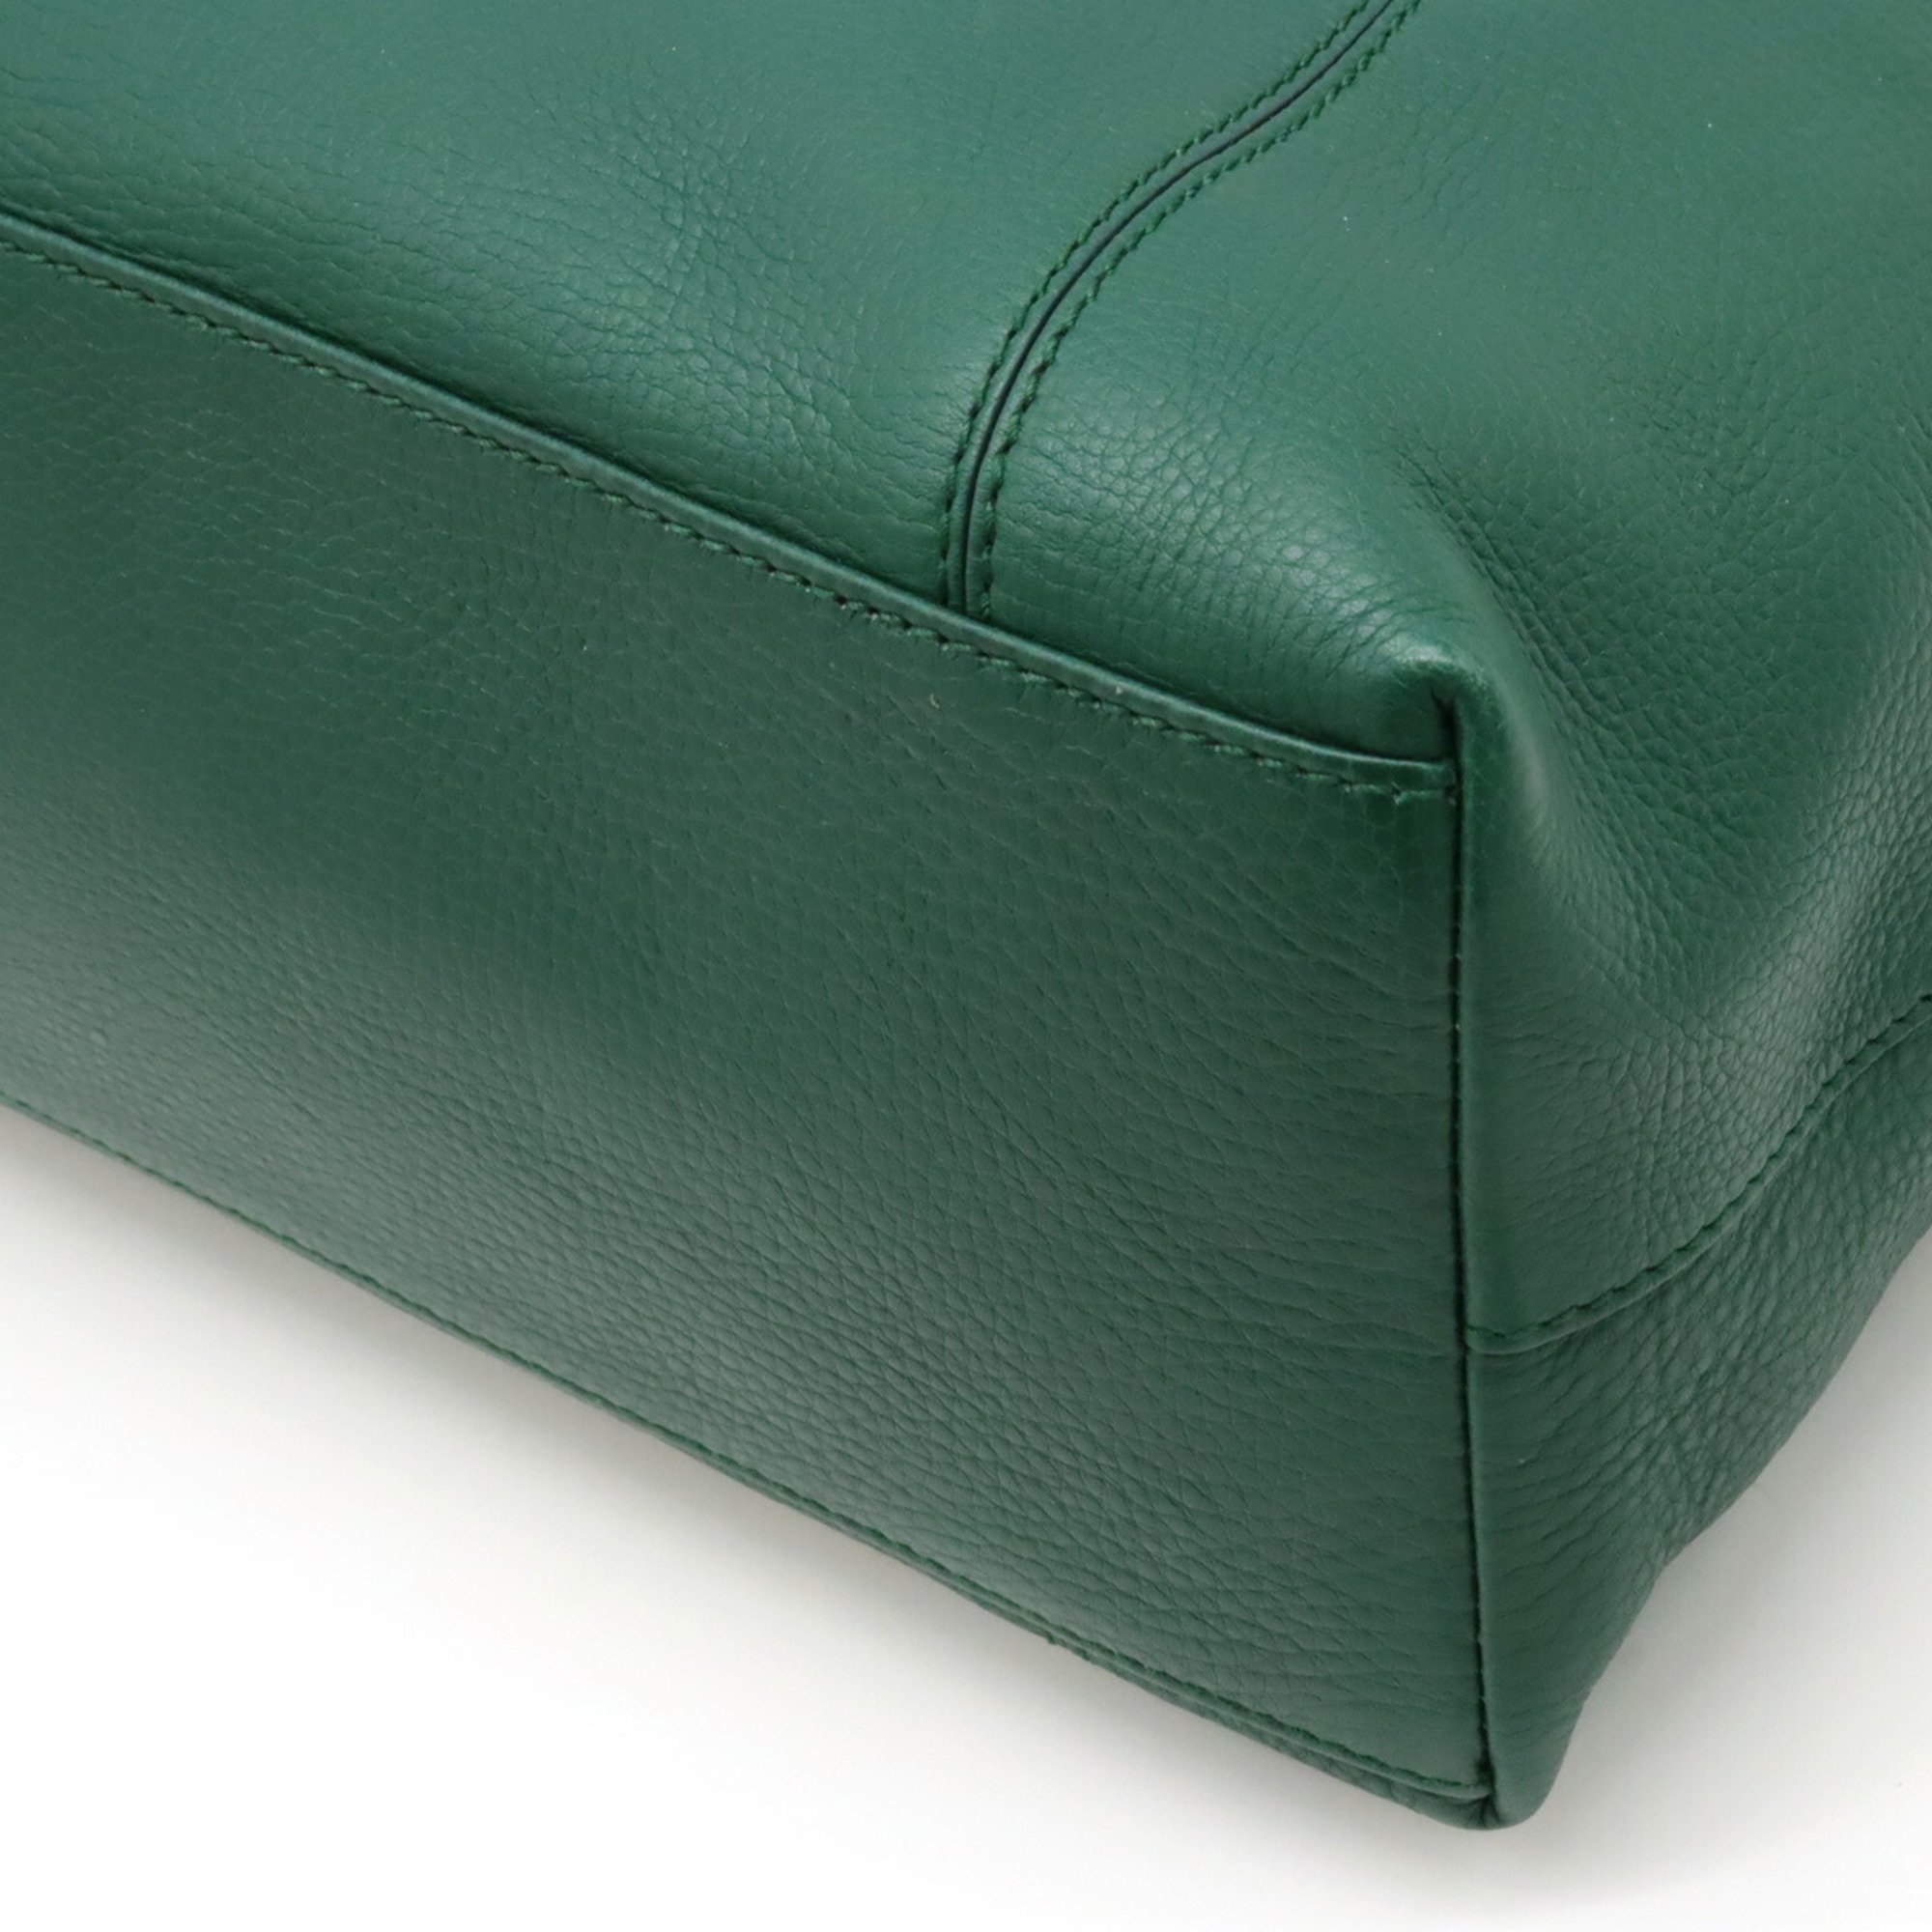 BVLGARI Octo Tote Bag Shoulder Leather Green Mocha Brown